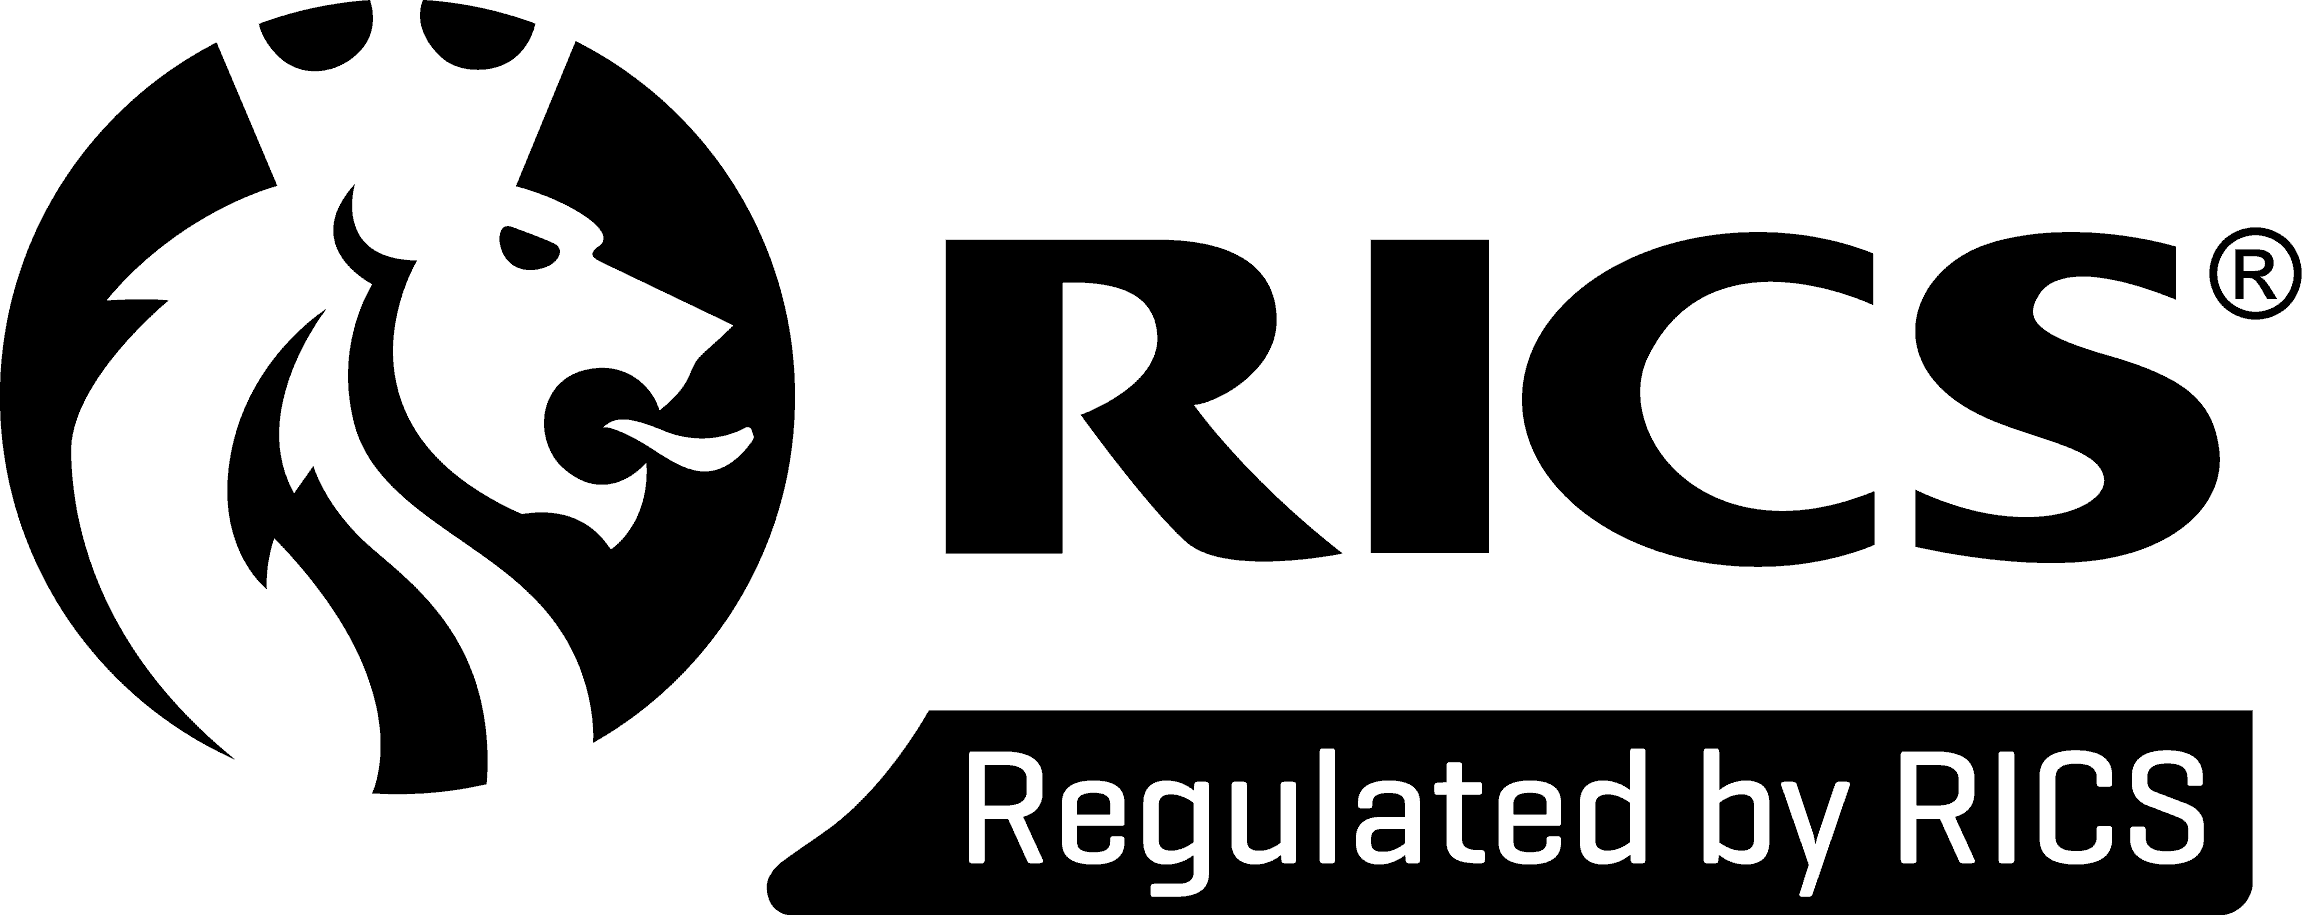 Image result for rics regulated firm logo